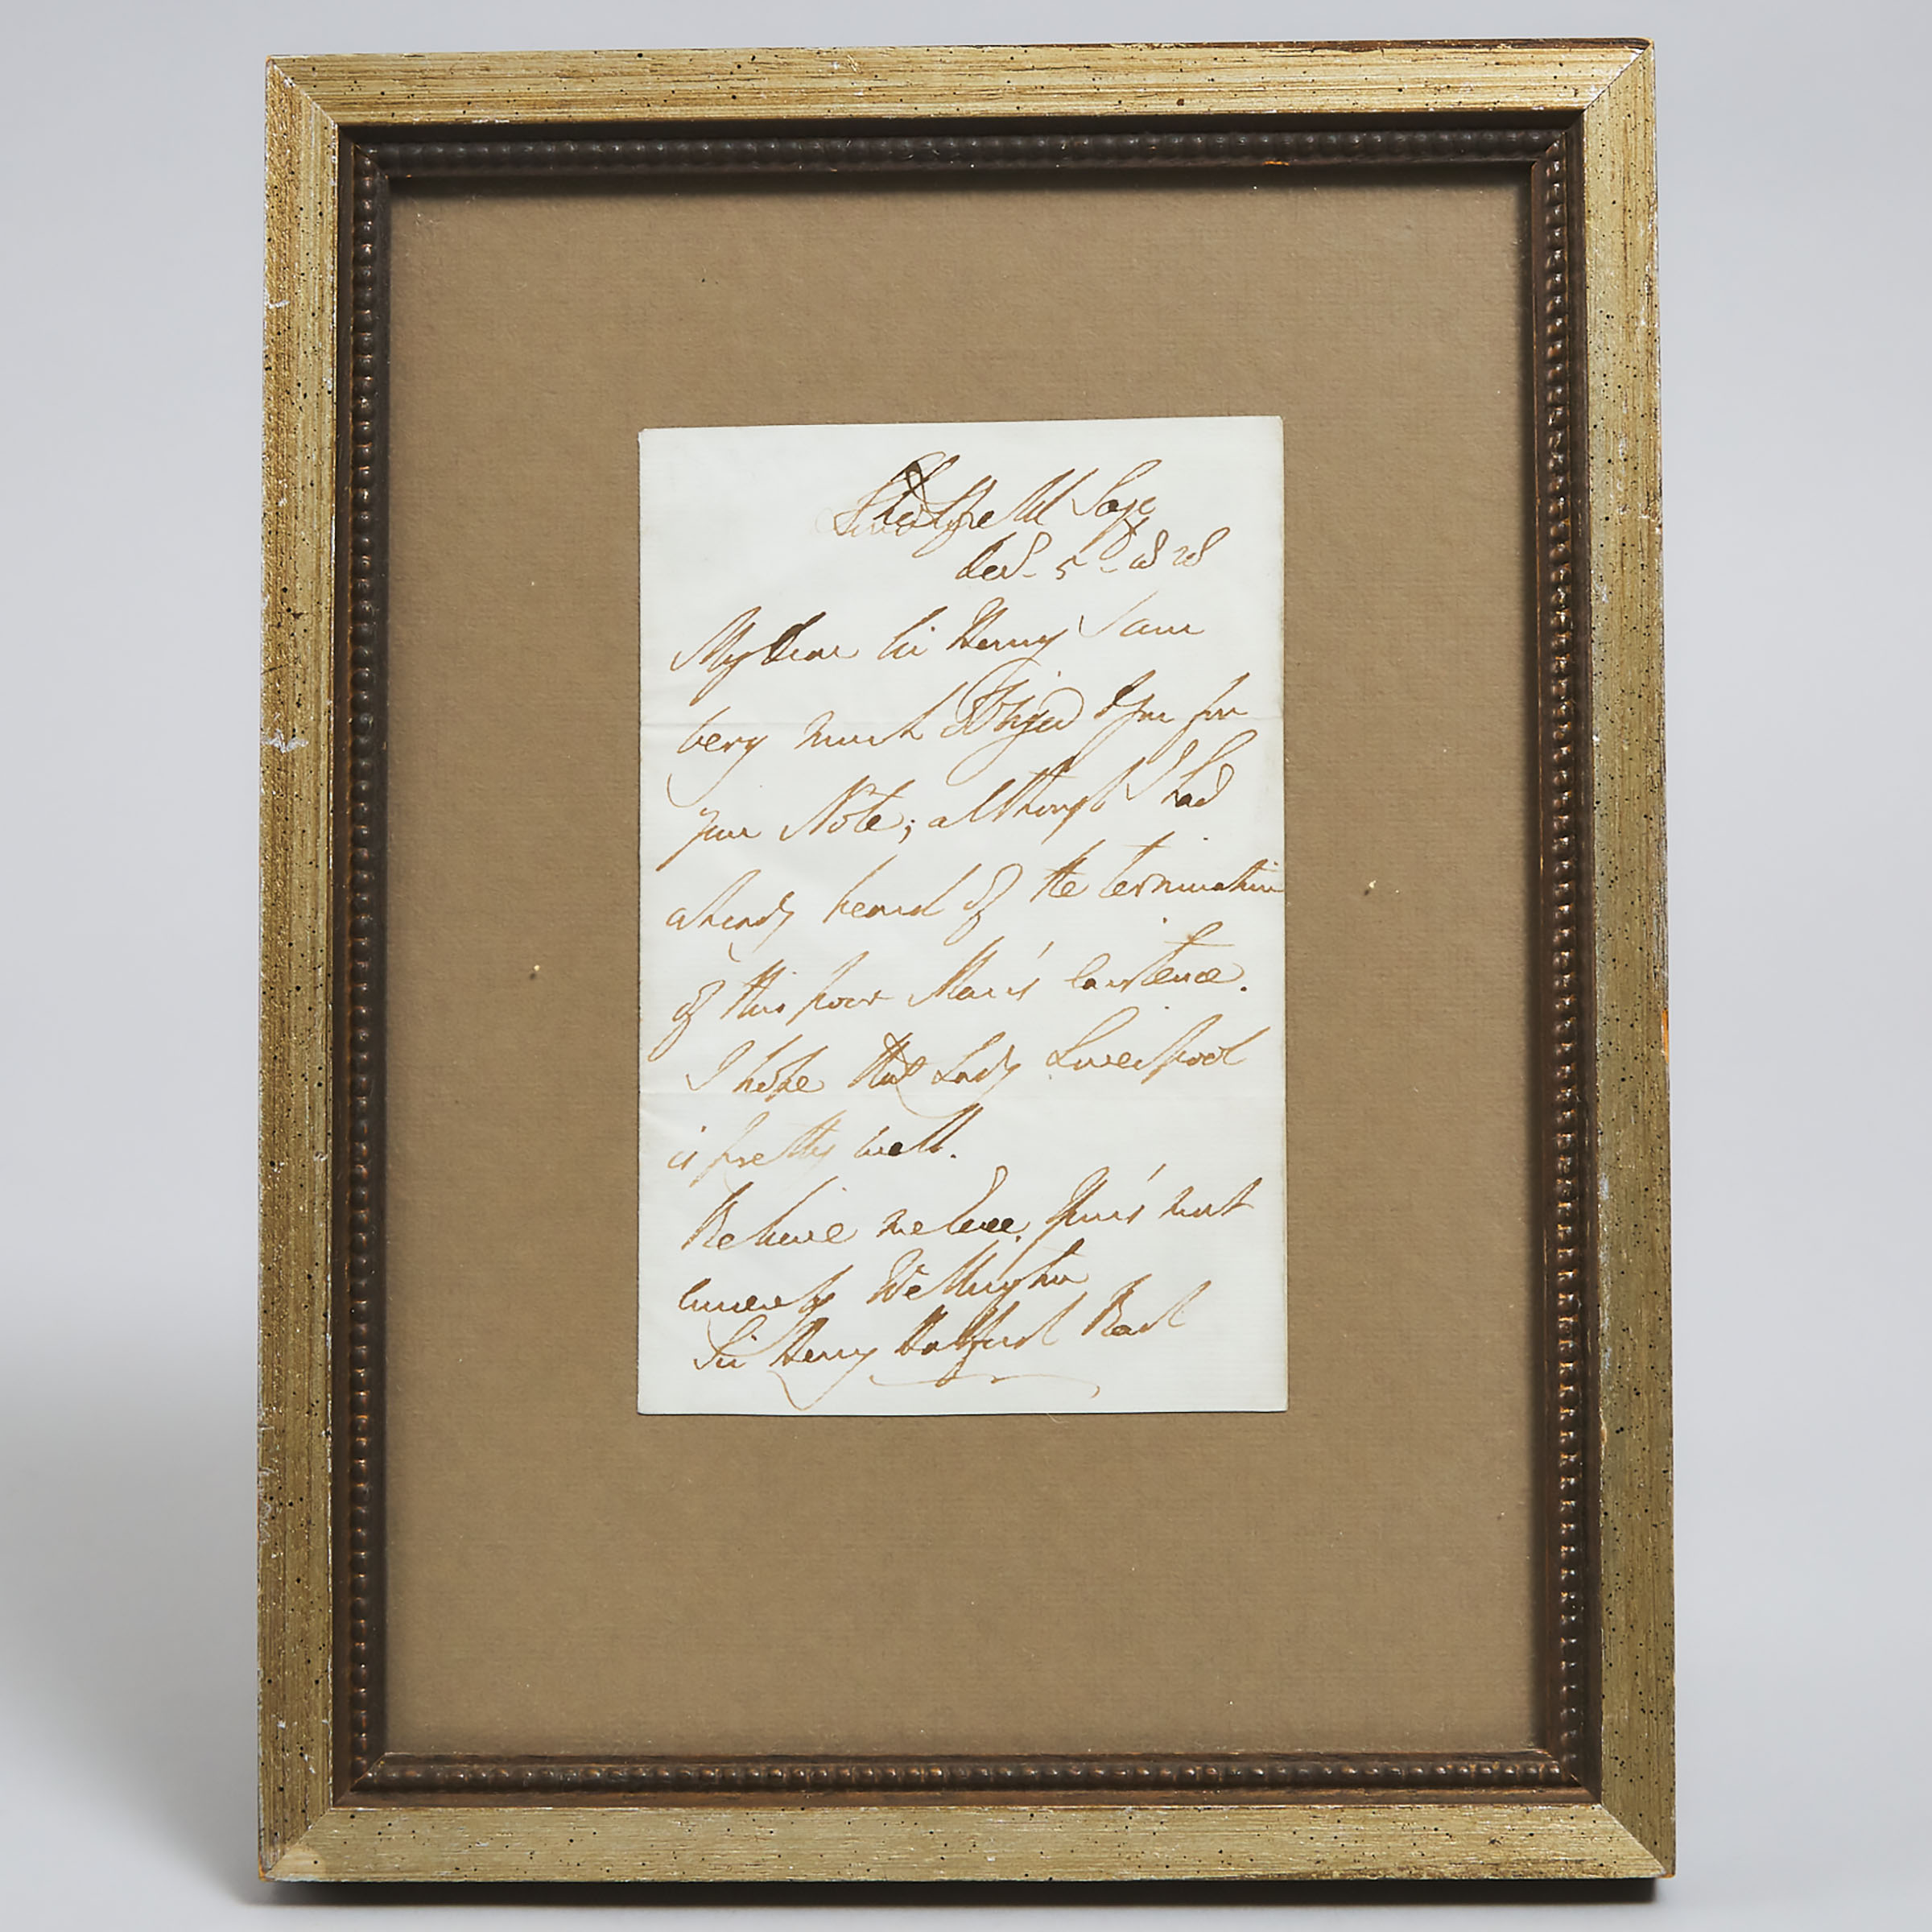 Sir Arthur Wellesly, 1st Duke of Wellington Autographed Letter, Signed, to Sir Henry Halford, Dec. 5, 1828